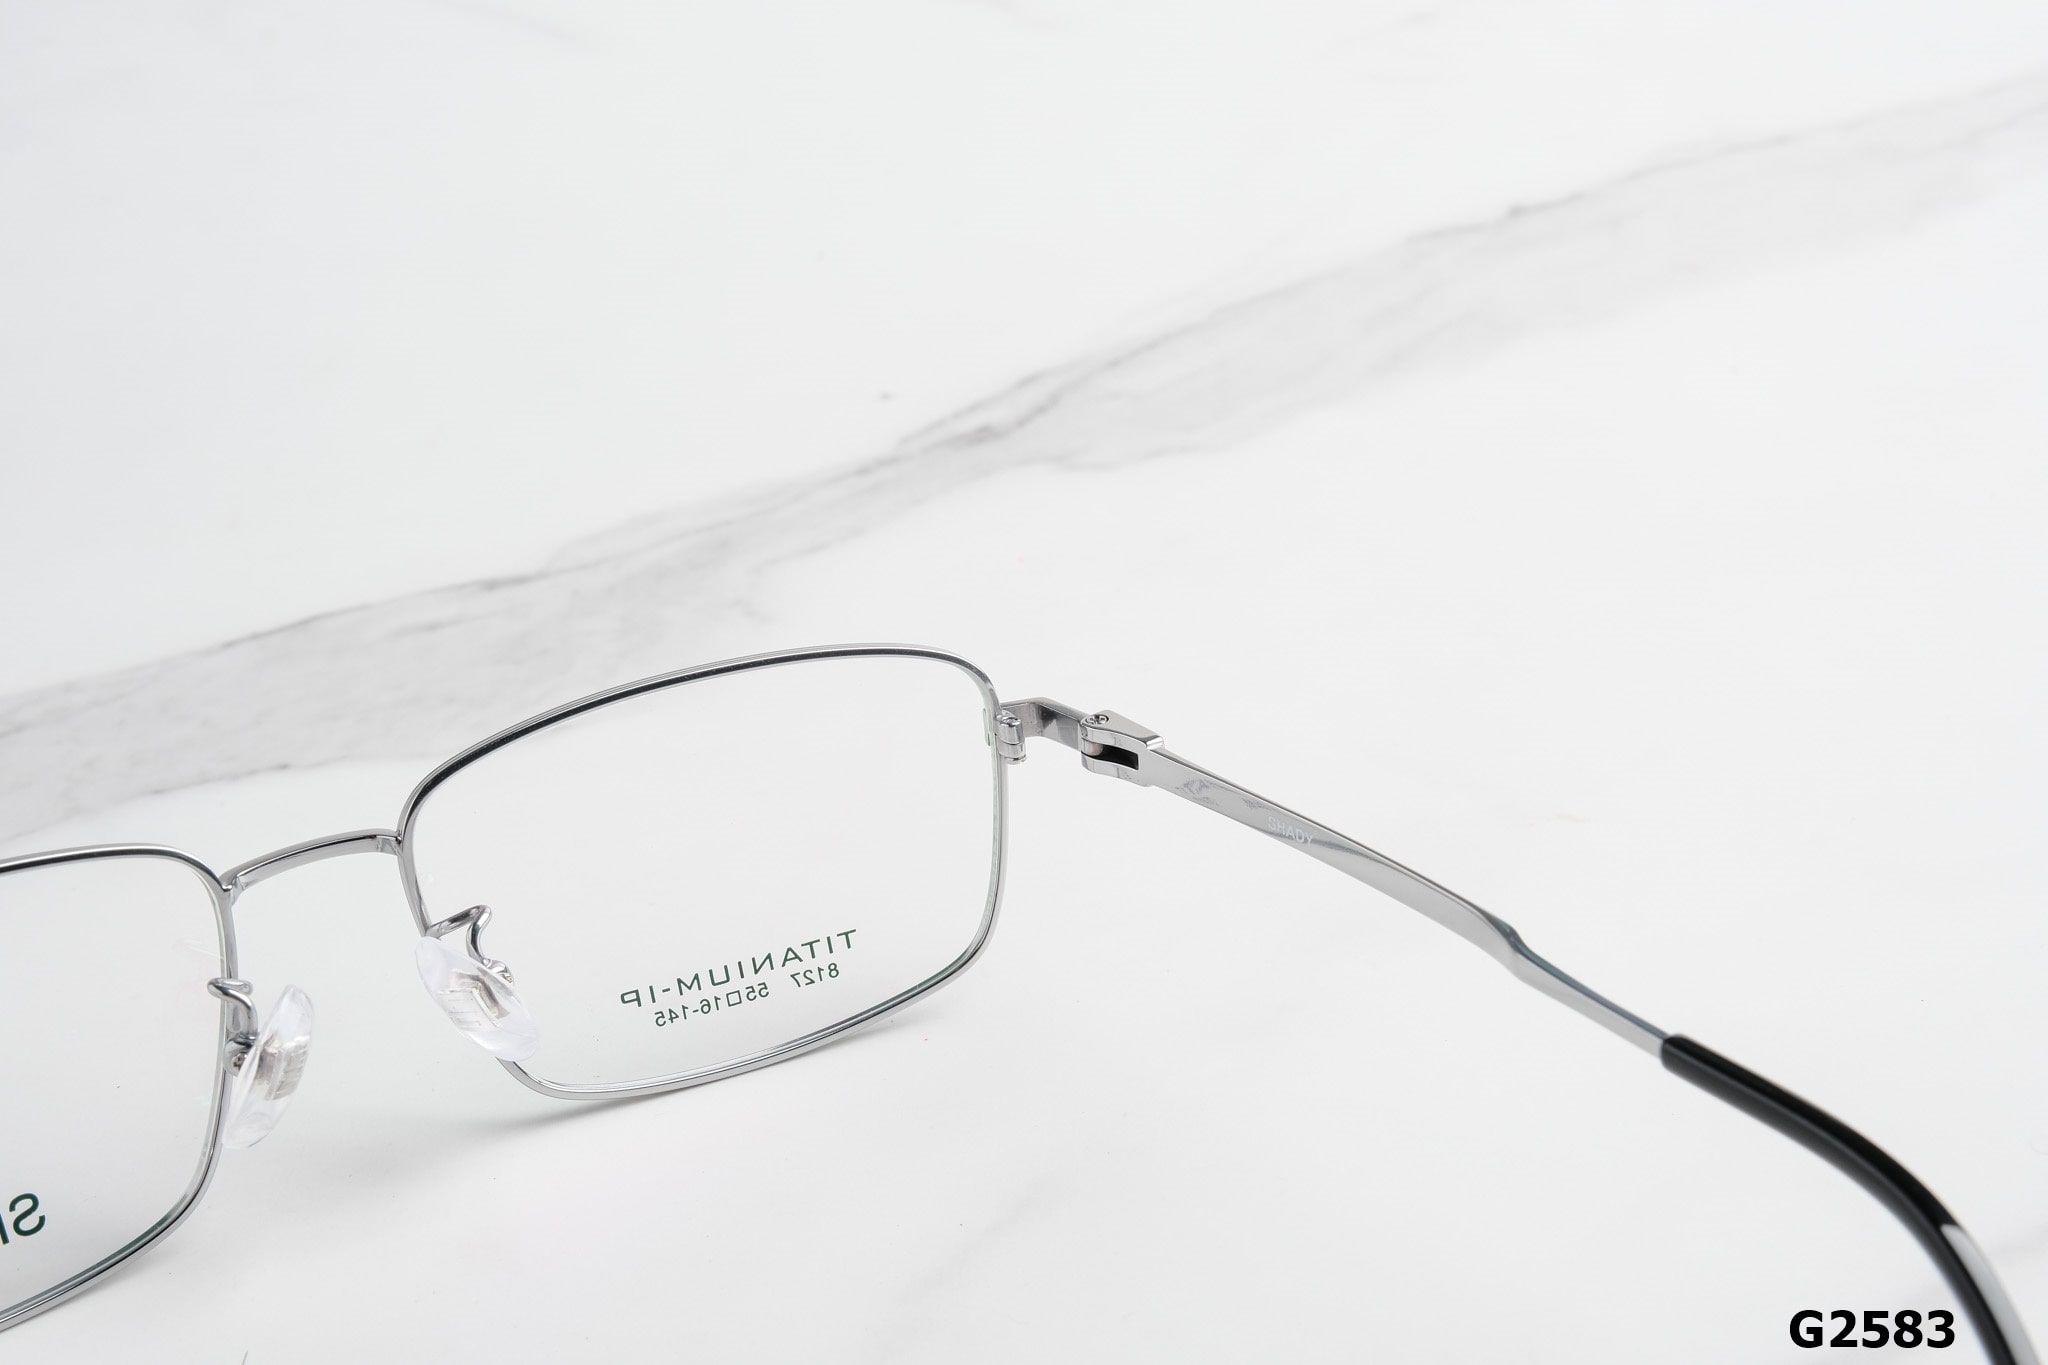  SHADY Eyewear - Glasses - G2583 